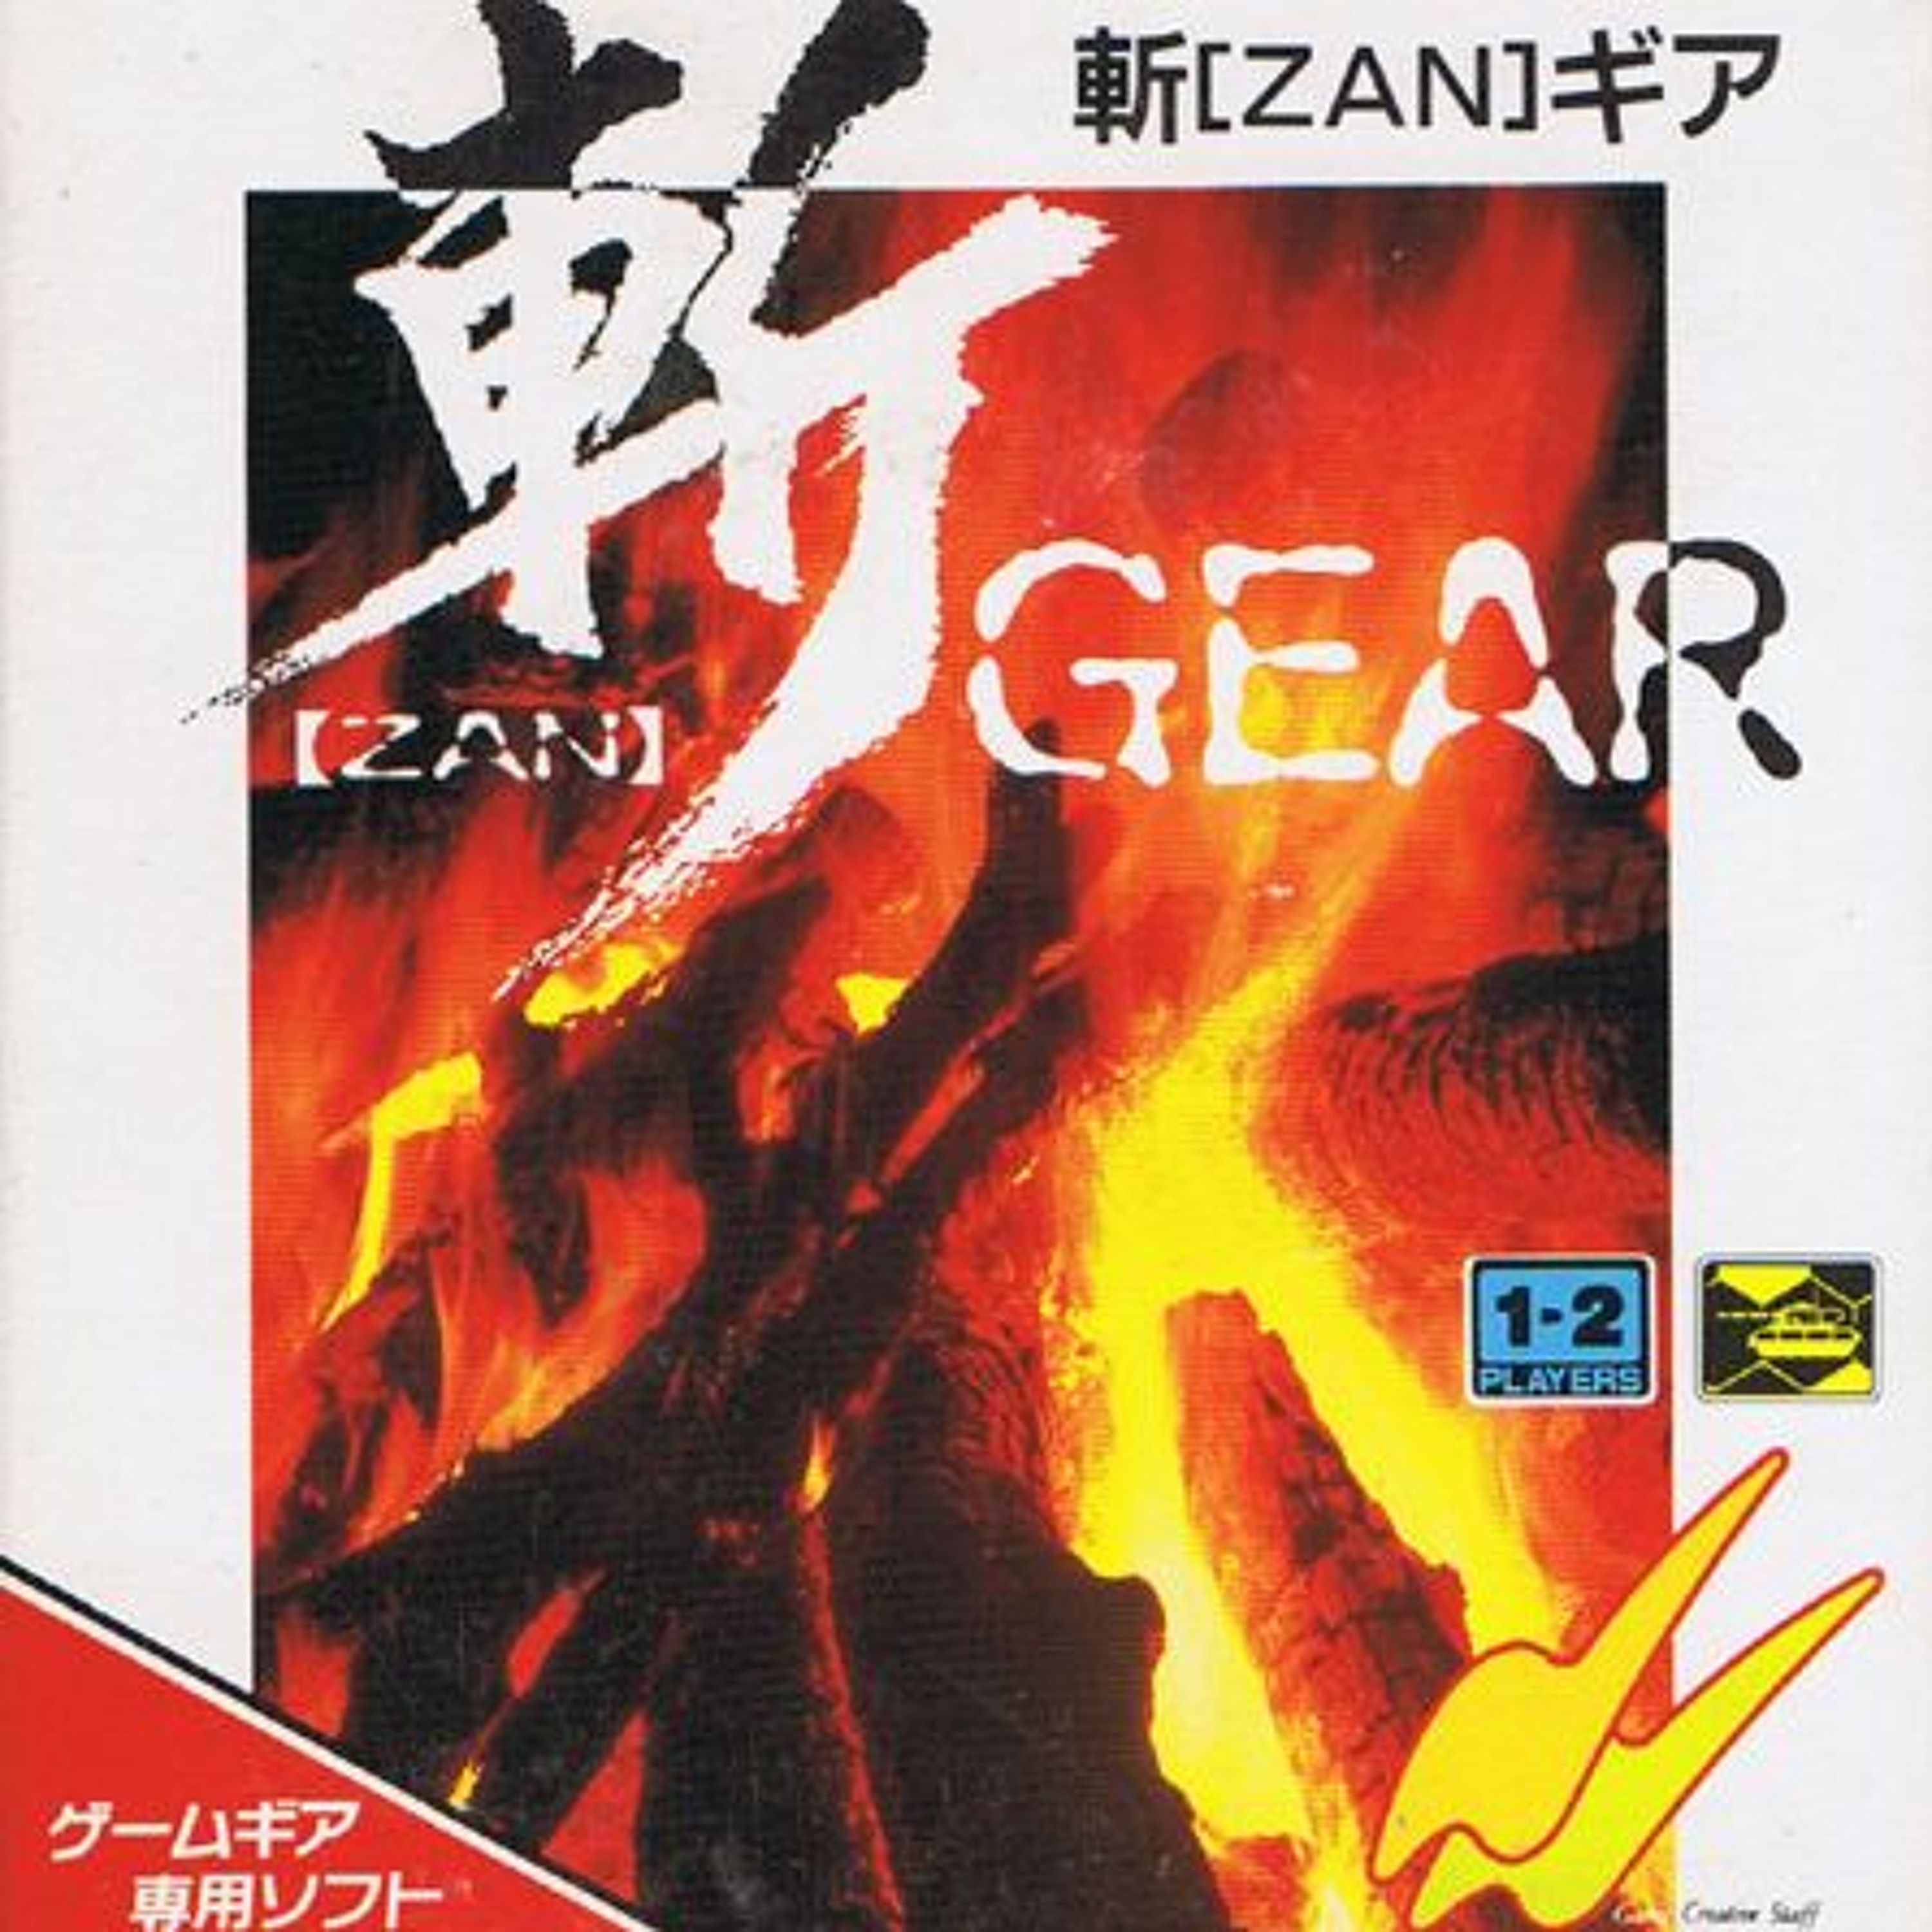 Episode 7: Zan Gear (Sega Game Gear)